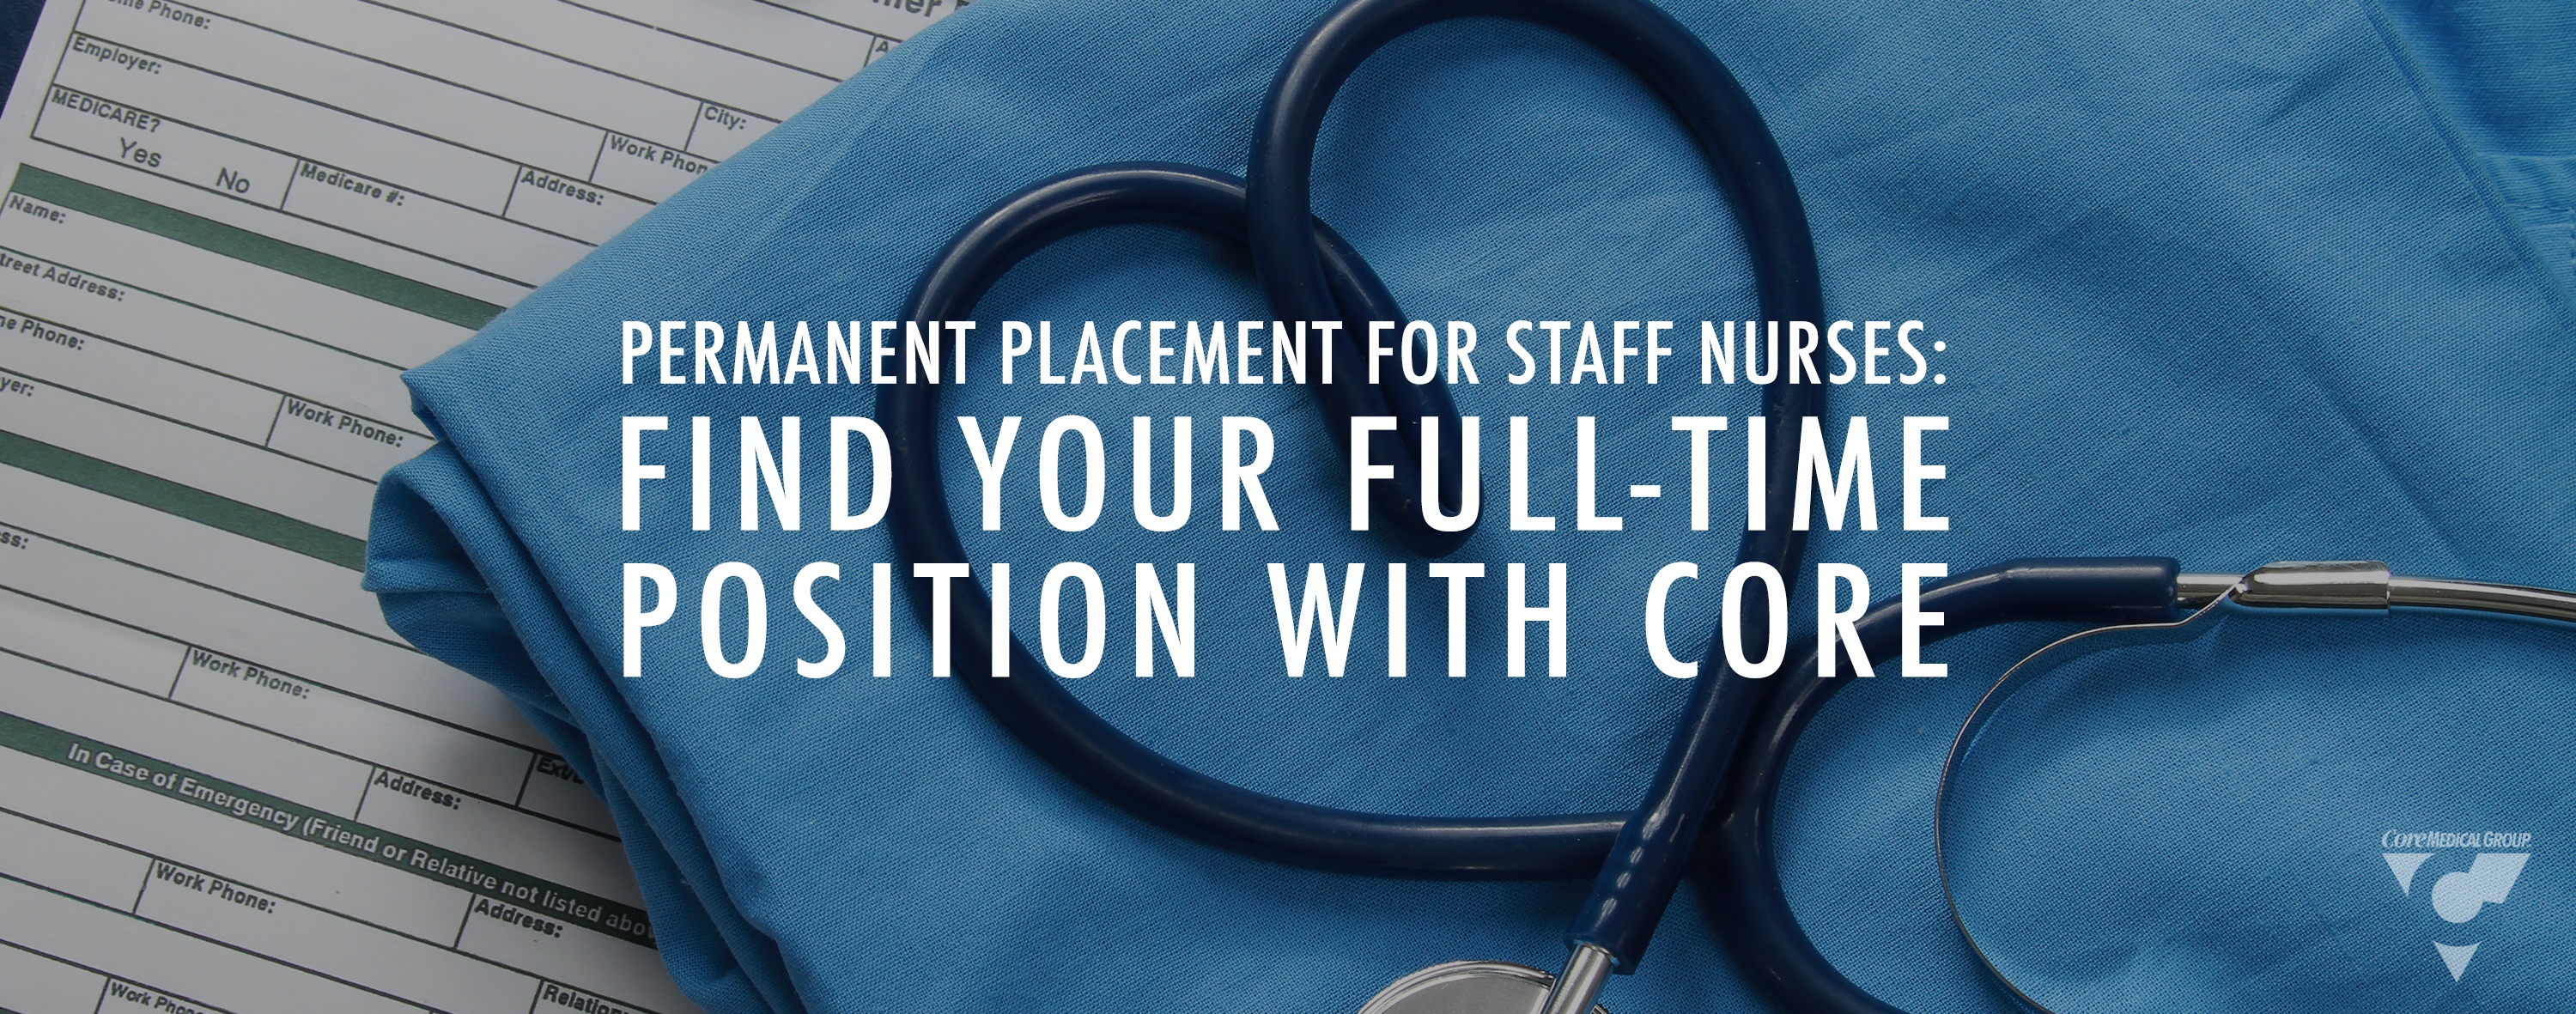 Permanent Placement for Staff Nurses